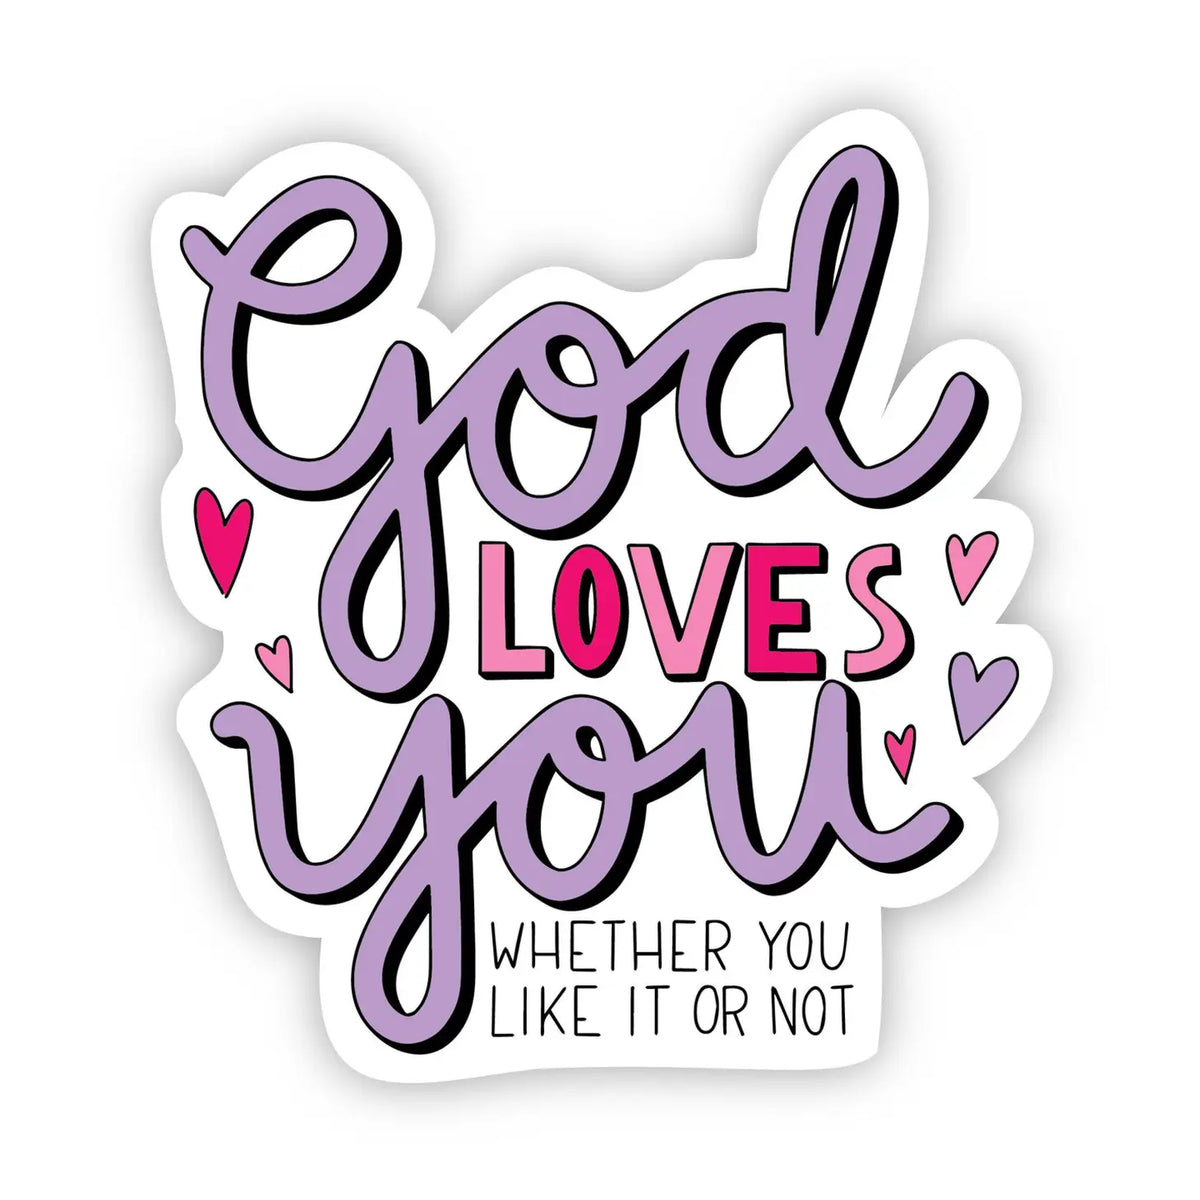 God Loves You Sticker